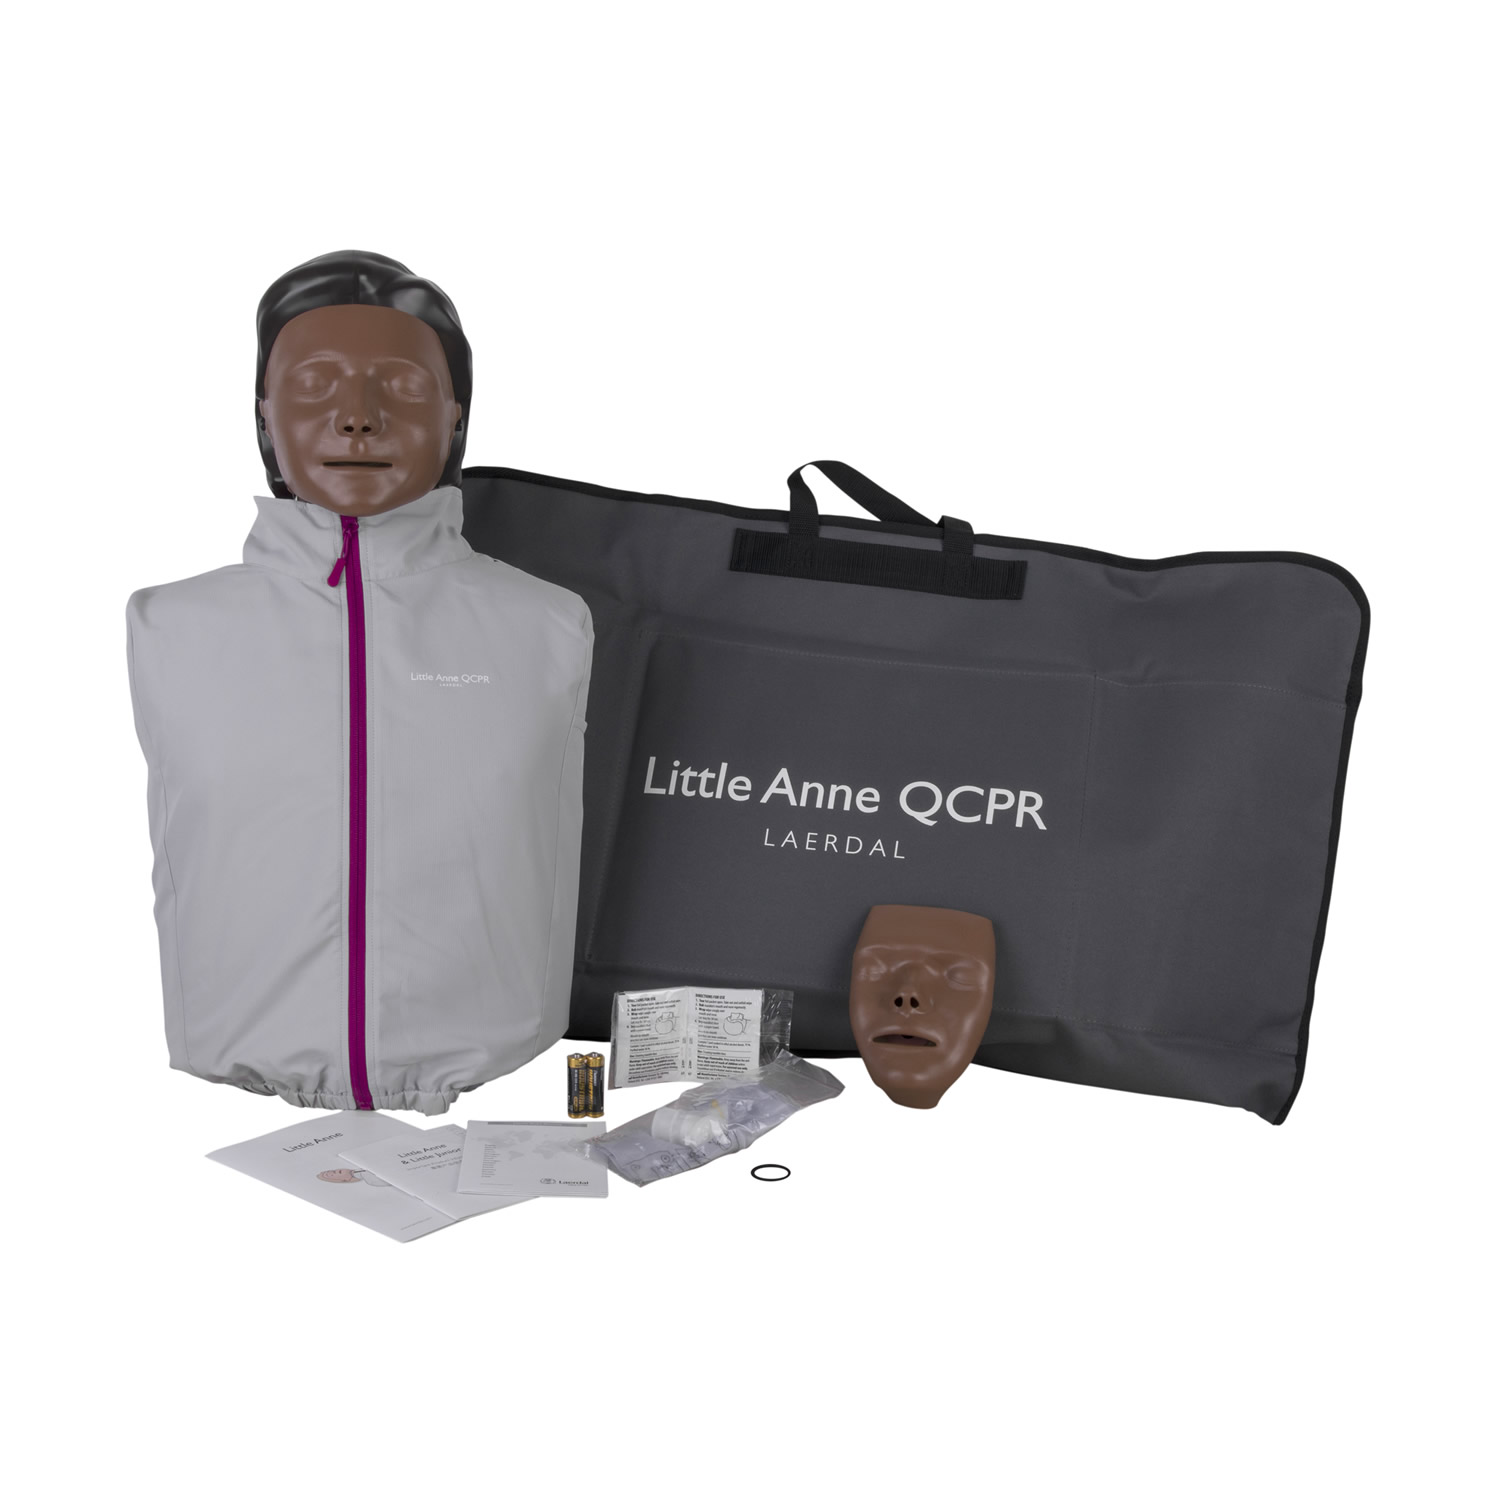 Laerdal Little Anne QCPR Training Manikin with Carry Bag - Dark Skin